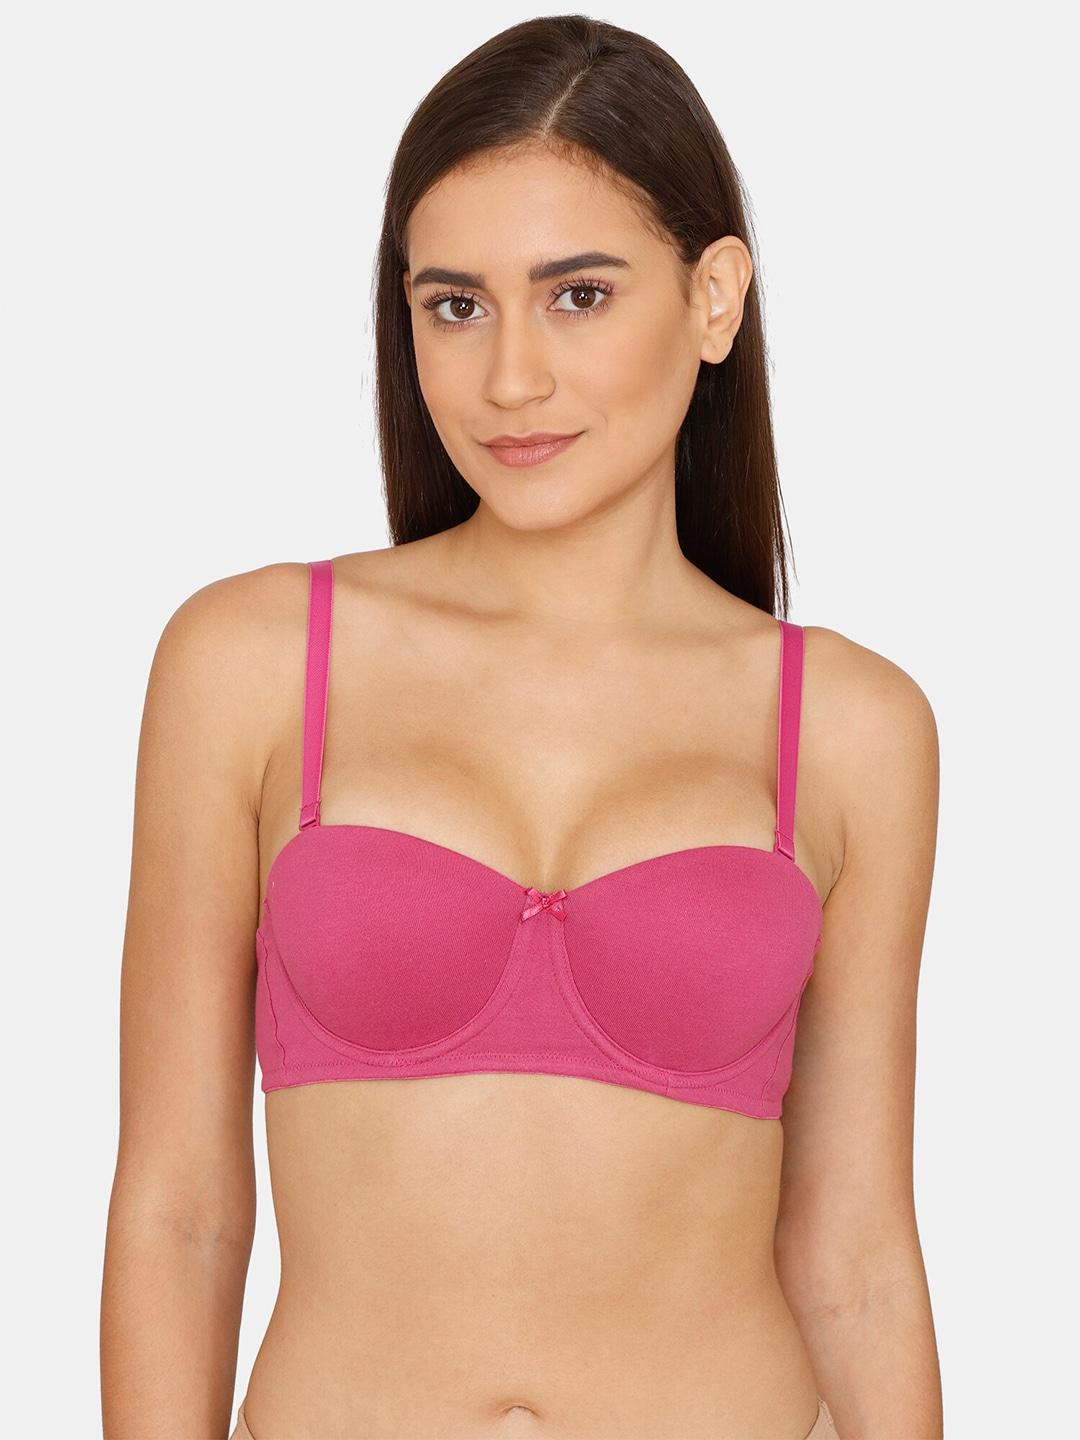 rosaline-by-zivame-pink-bra-underwired-lightly-padded